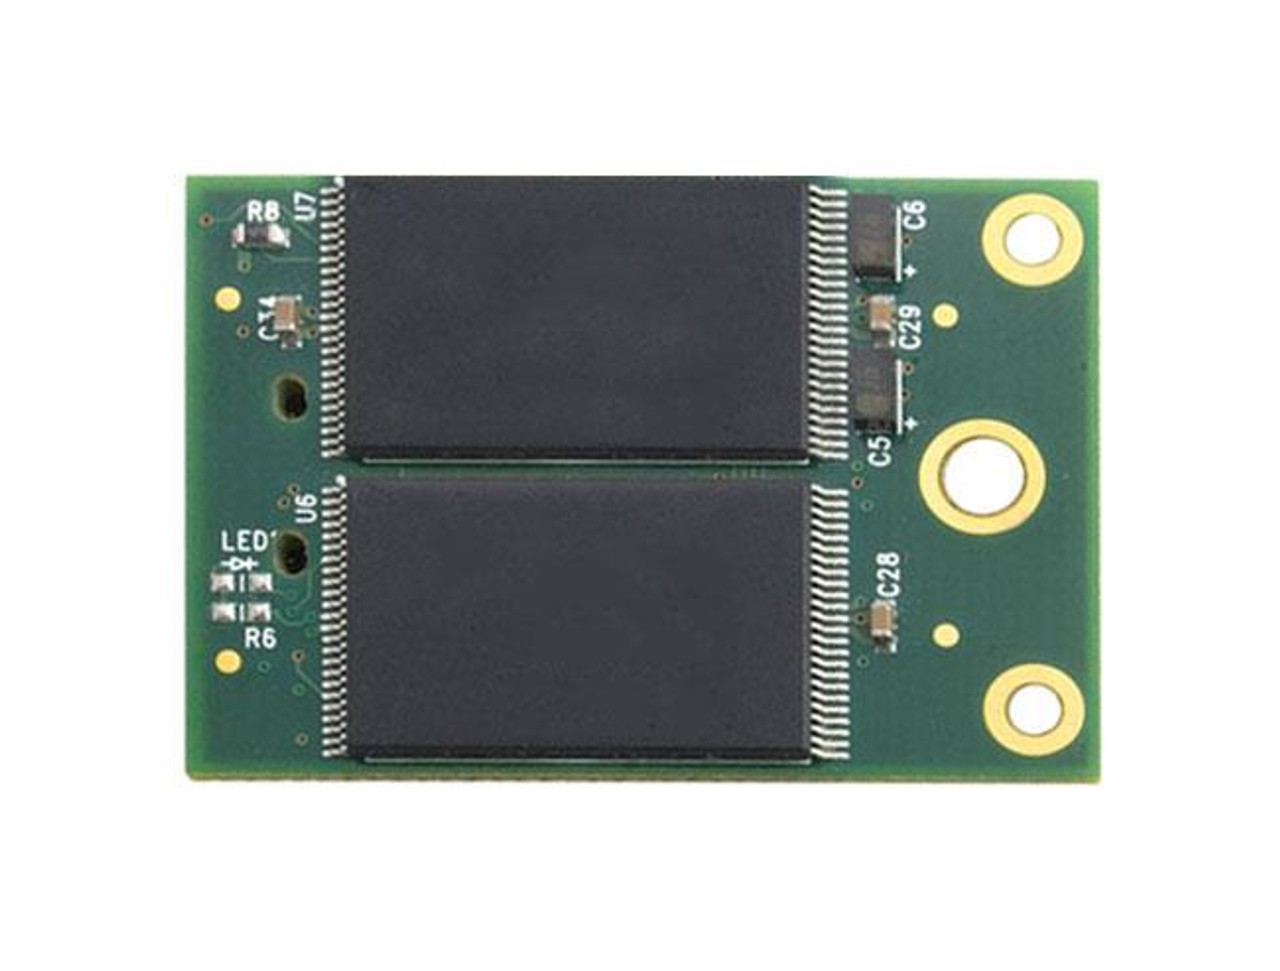 Micron MTEDCAR002SAJ1M2 e230 Series 2GB Single-Level Cell USB 2.0 NAND Flash eUSB Solid State Drive